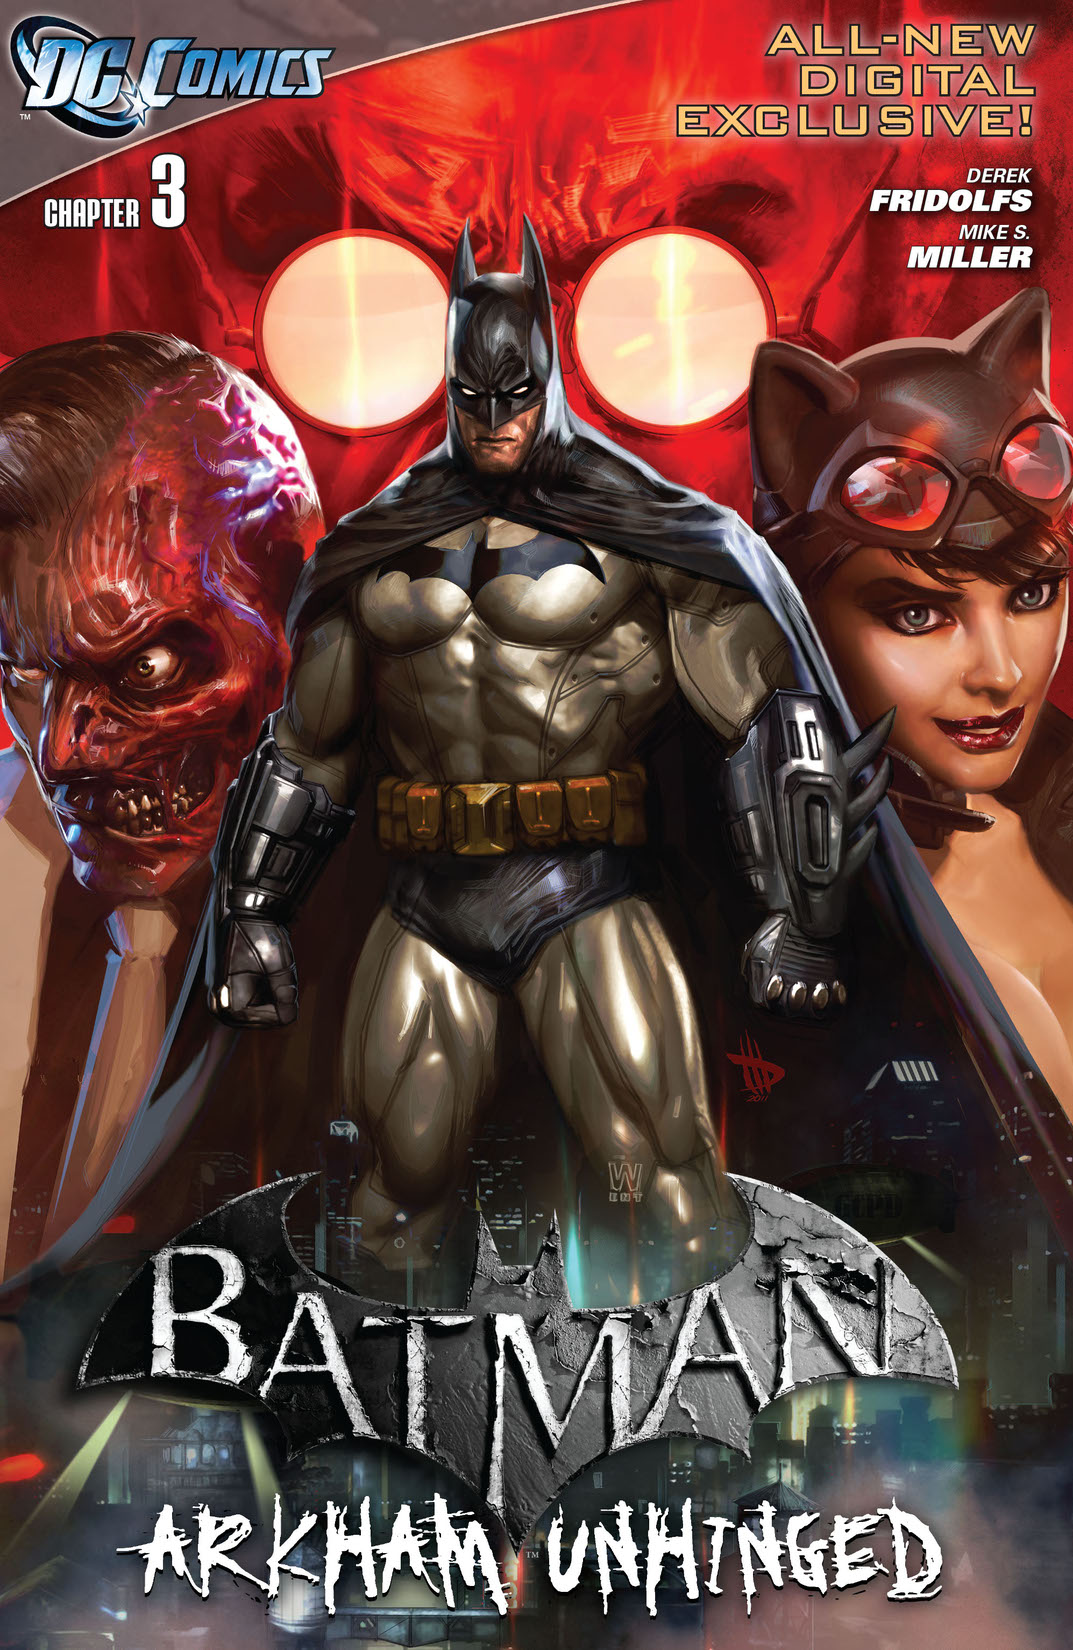 Batman: Arkham Unhinged #3 preview images